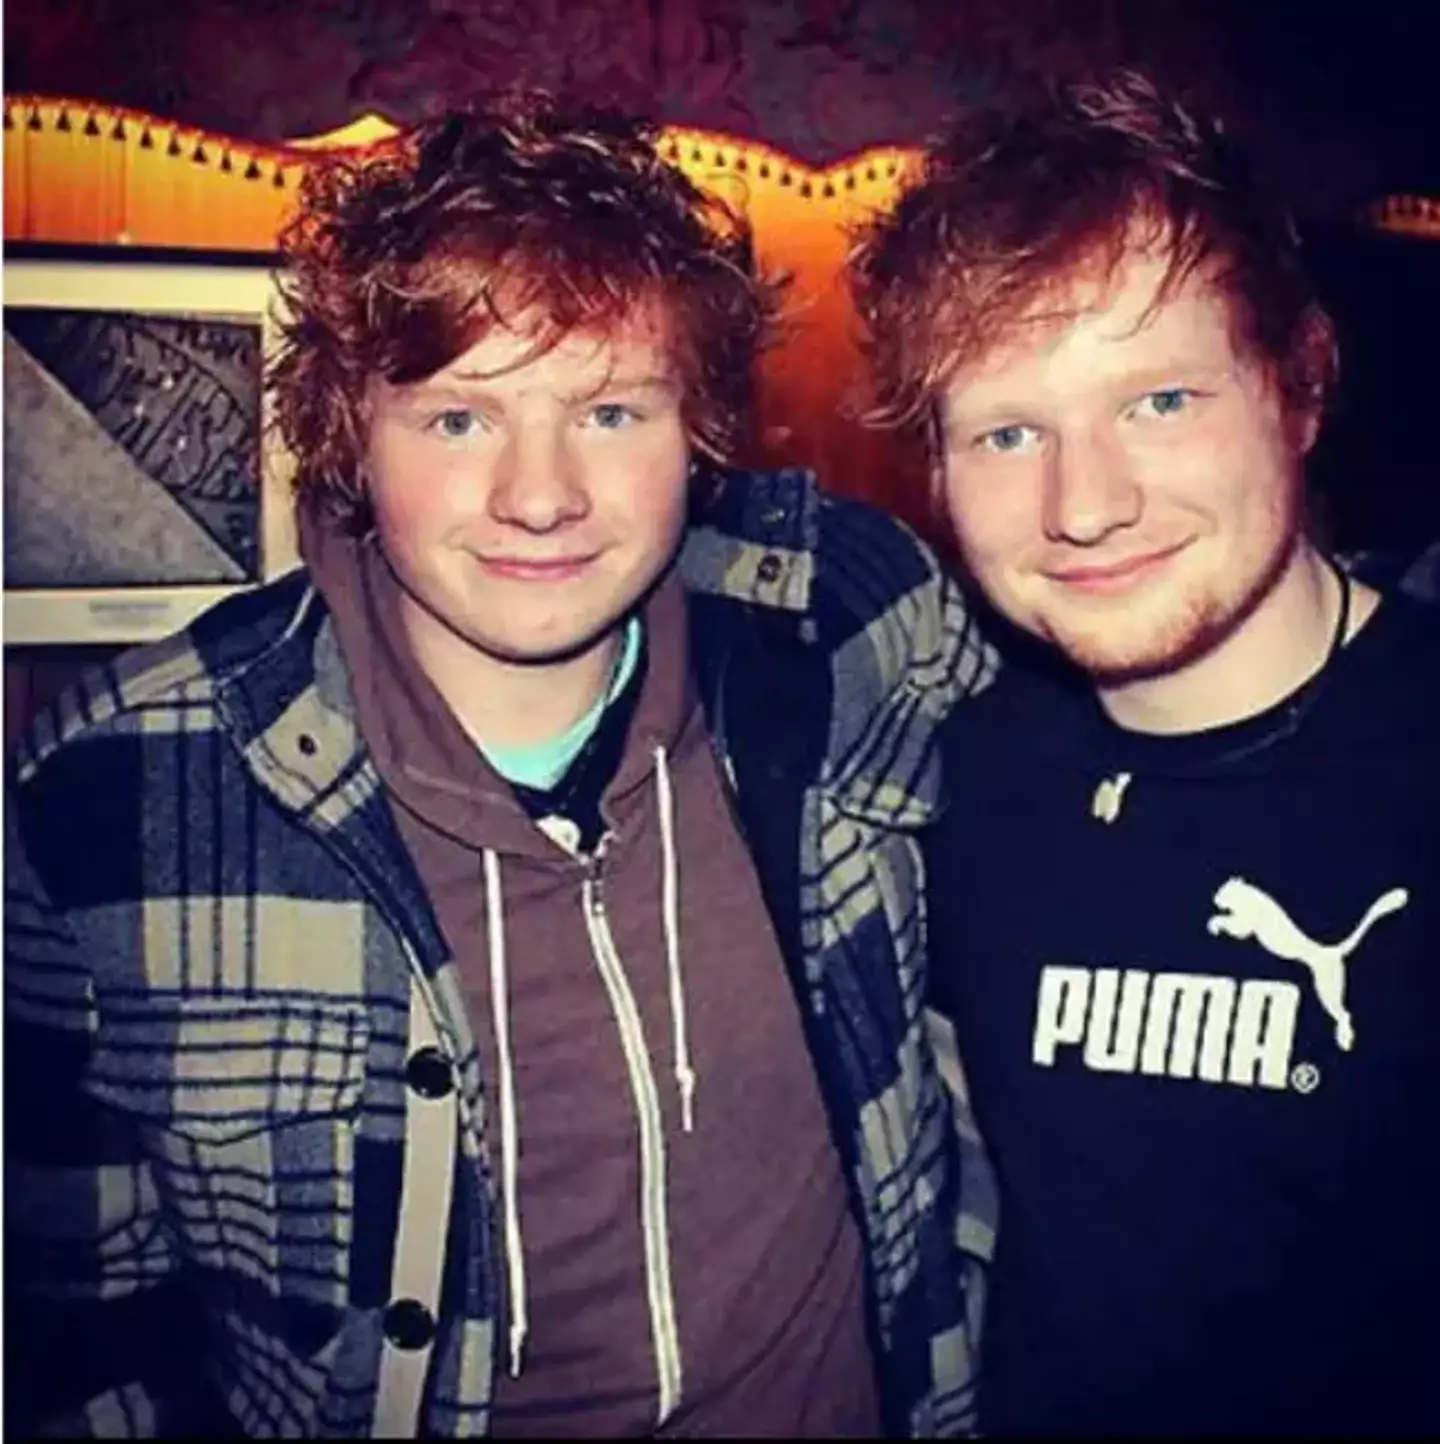 Ty Jones (left, I think) looks uncannily like Ed Sheeran.